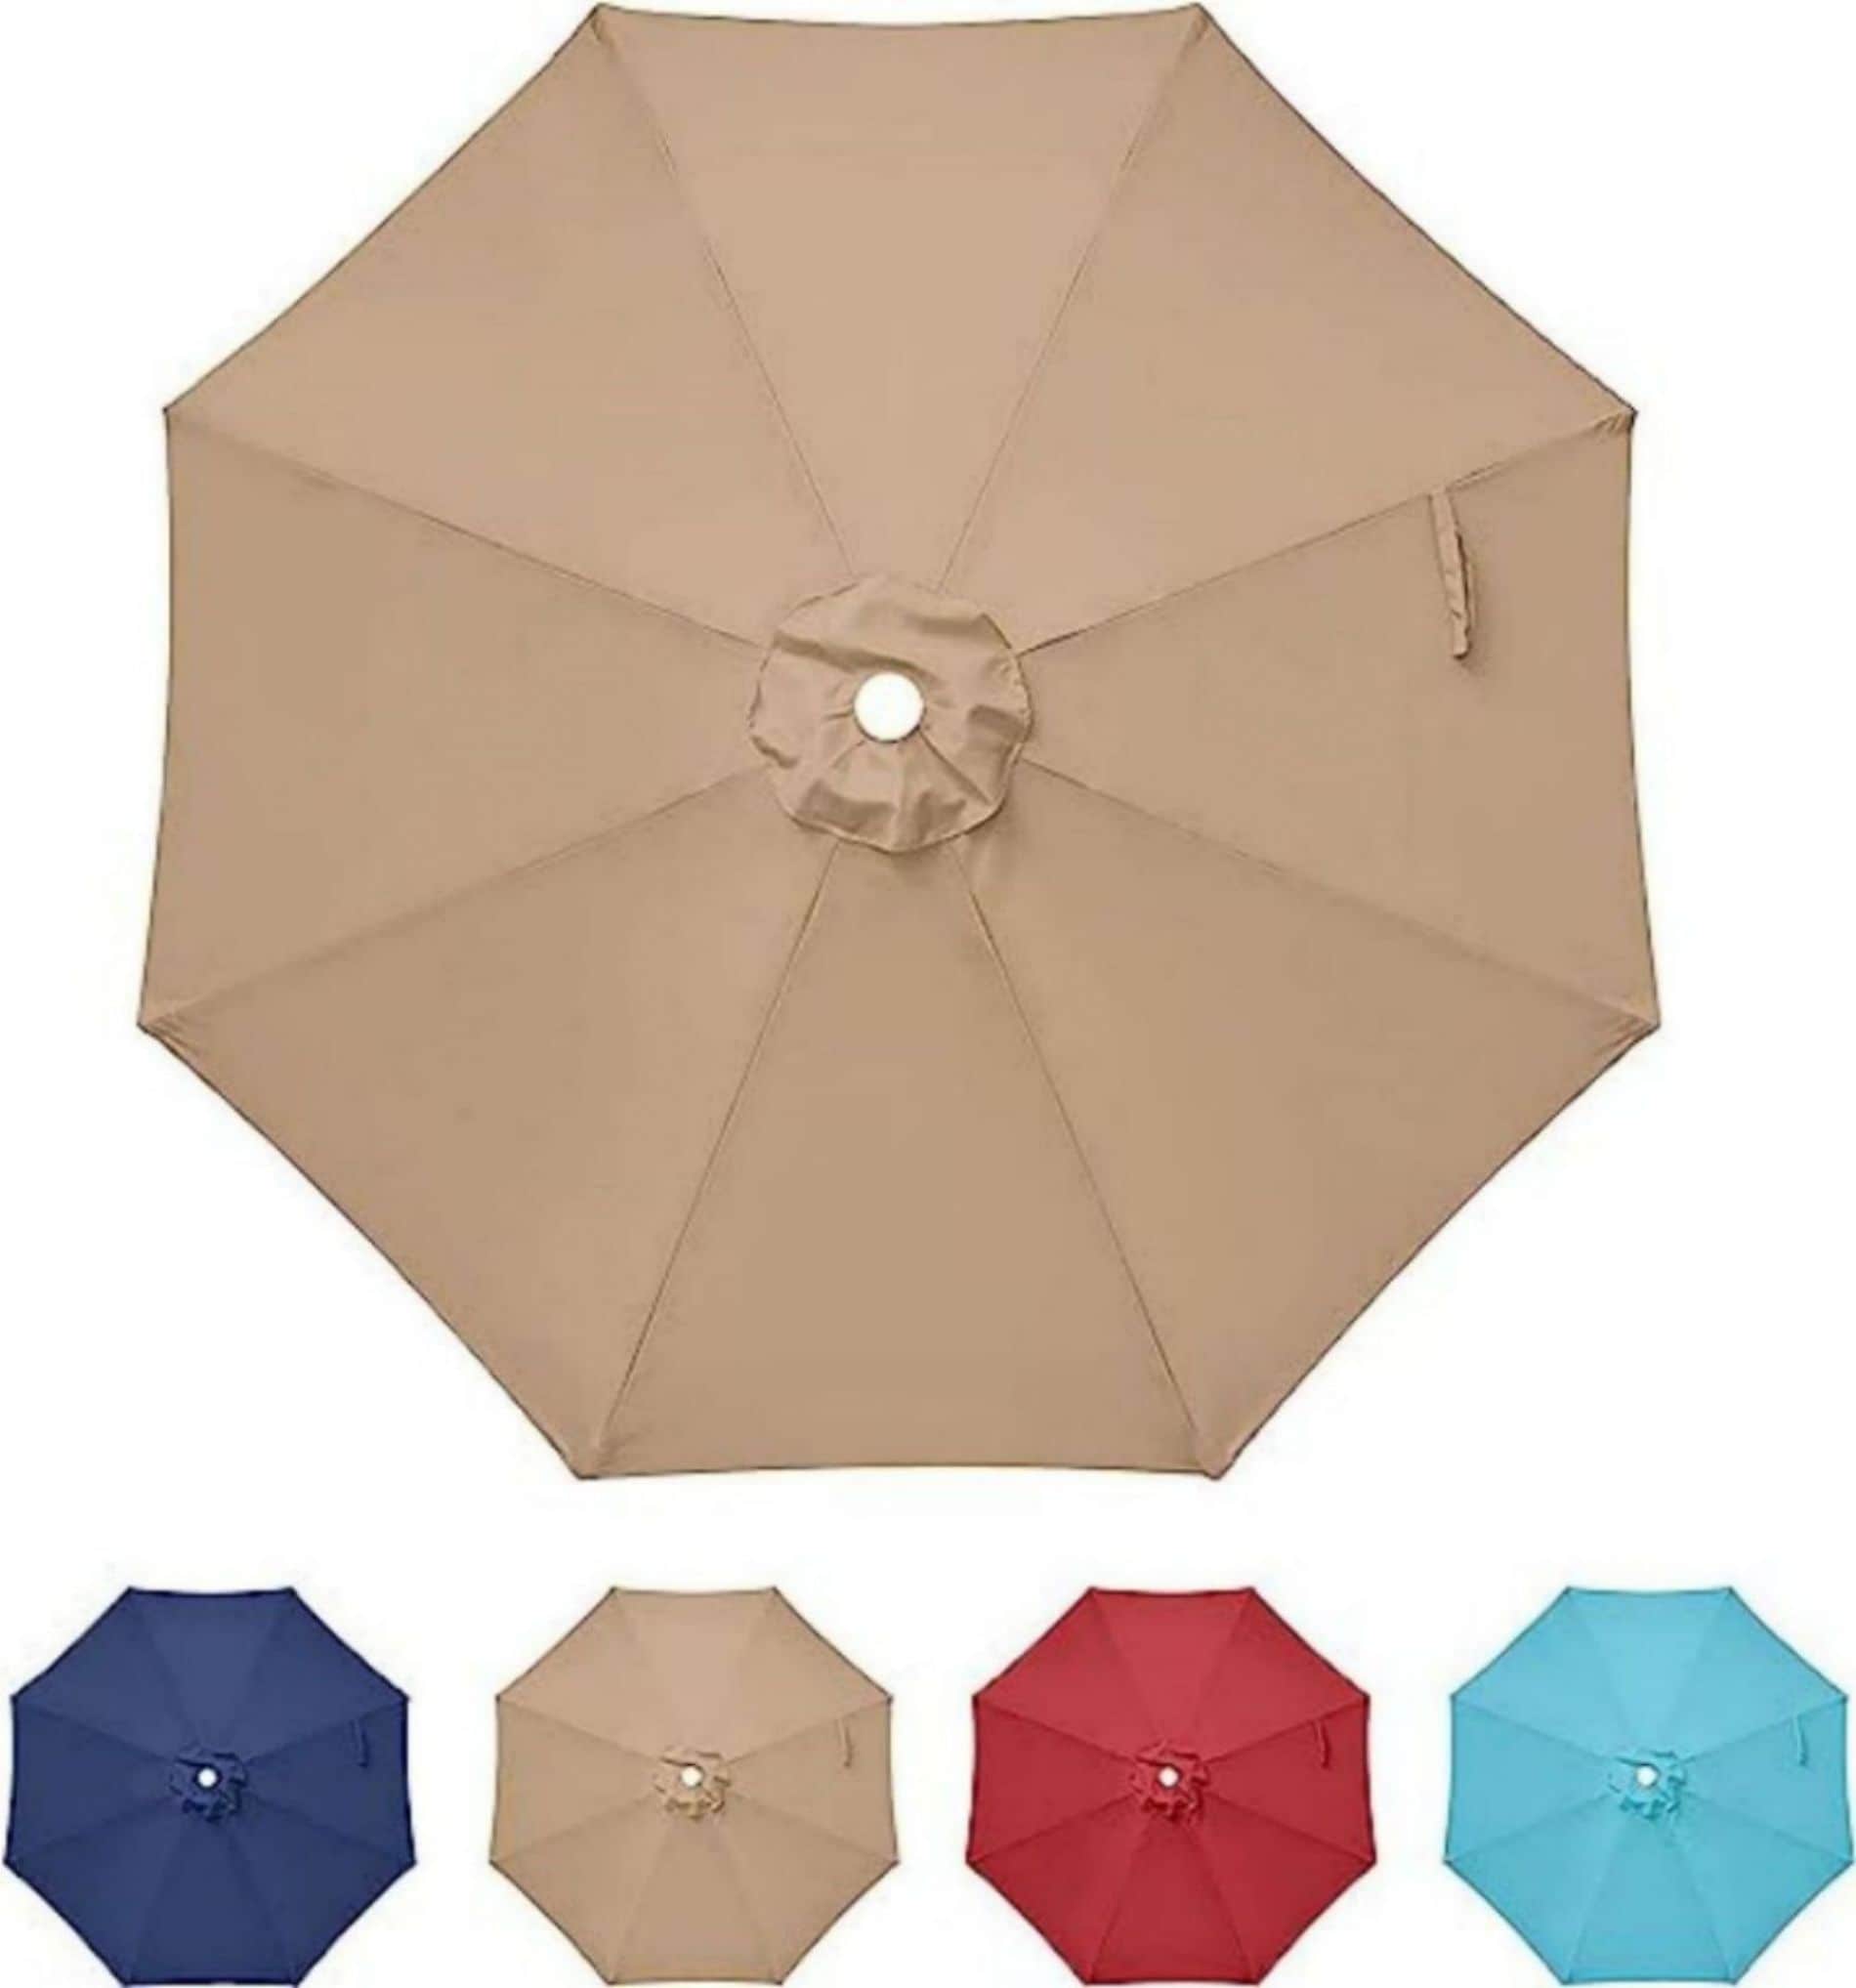 Canopy parts and accessories Patio Umbrella Accessories at